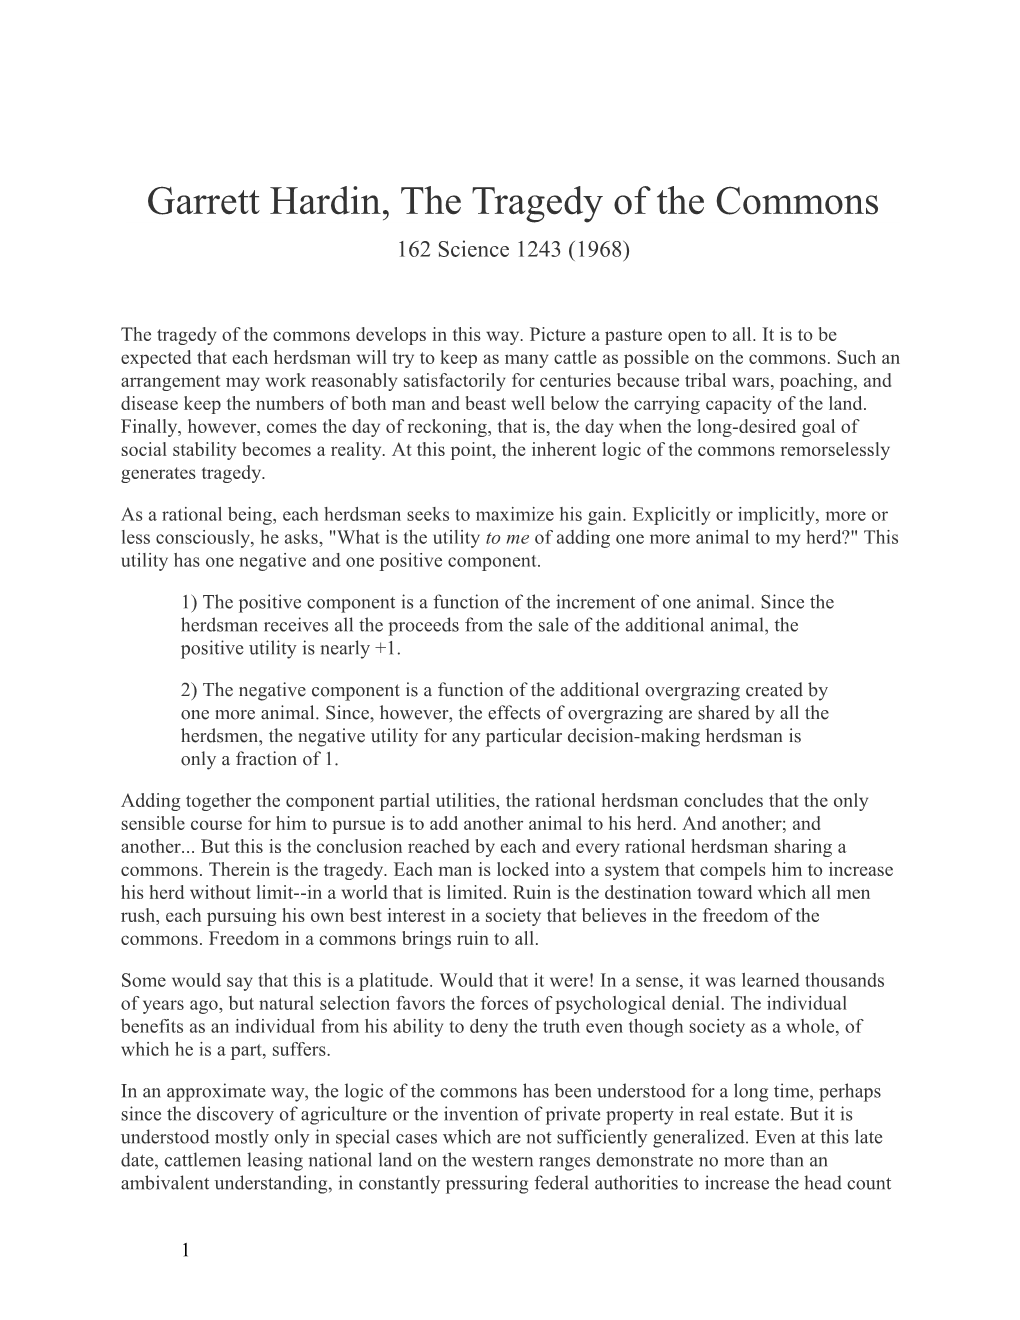 Garrett Hardin, the Tragedy of the Commons